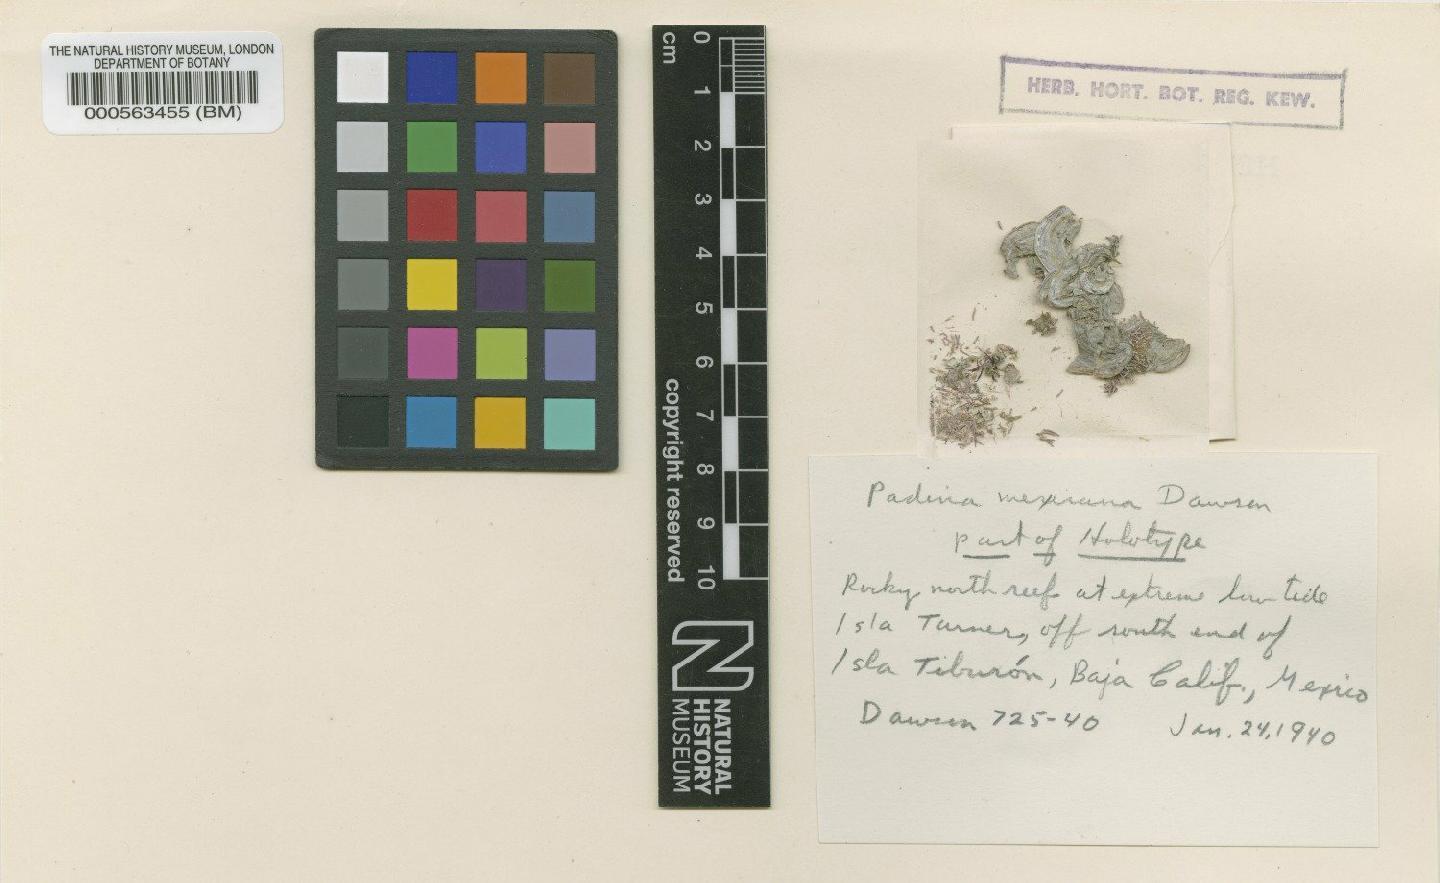 To NHMUK collection (Padina mexicana E.Y.Dawson; Holotype; NHMUK:ecatalogue:4719668)